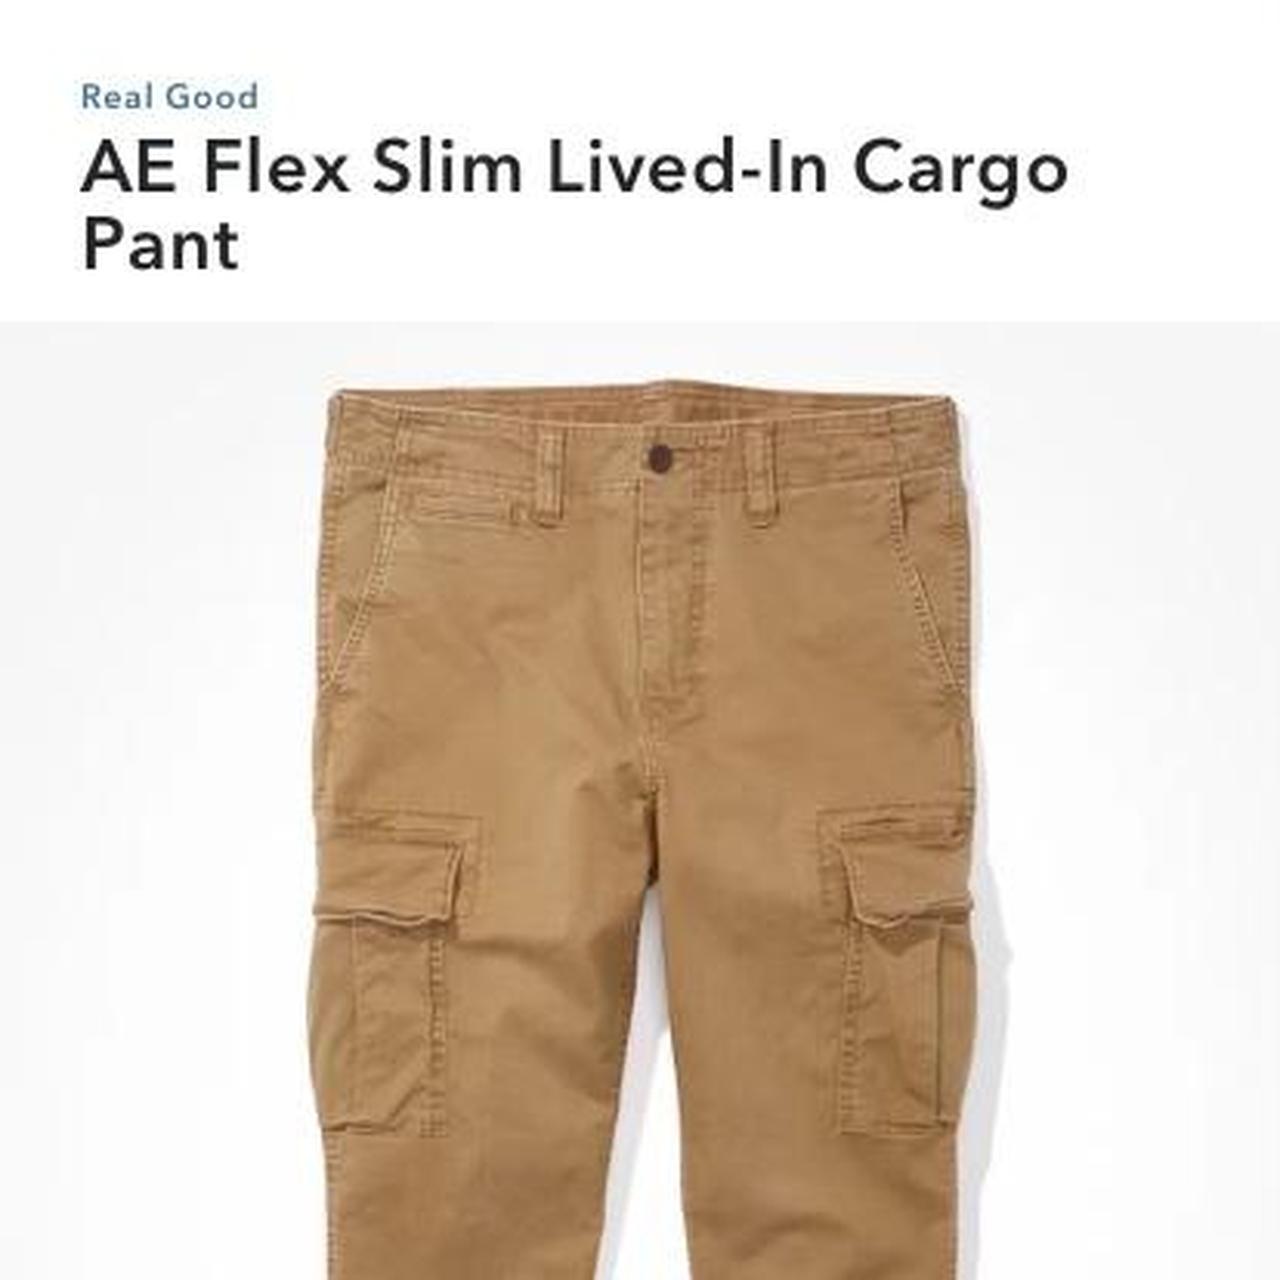 AE Flex Slim Lived-In Cargo Pant